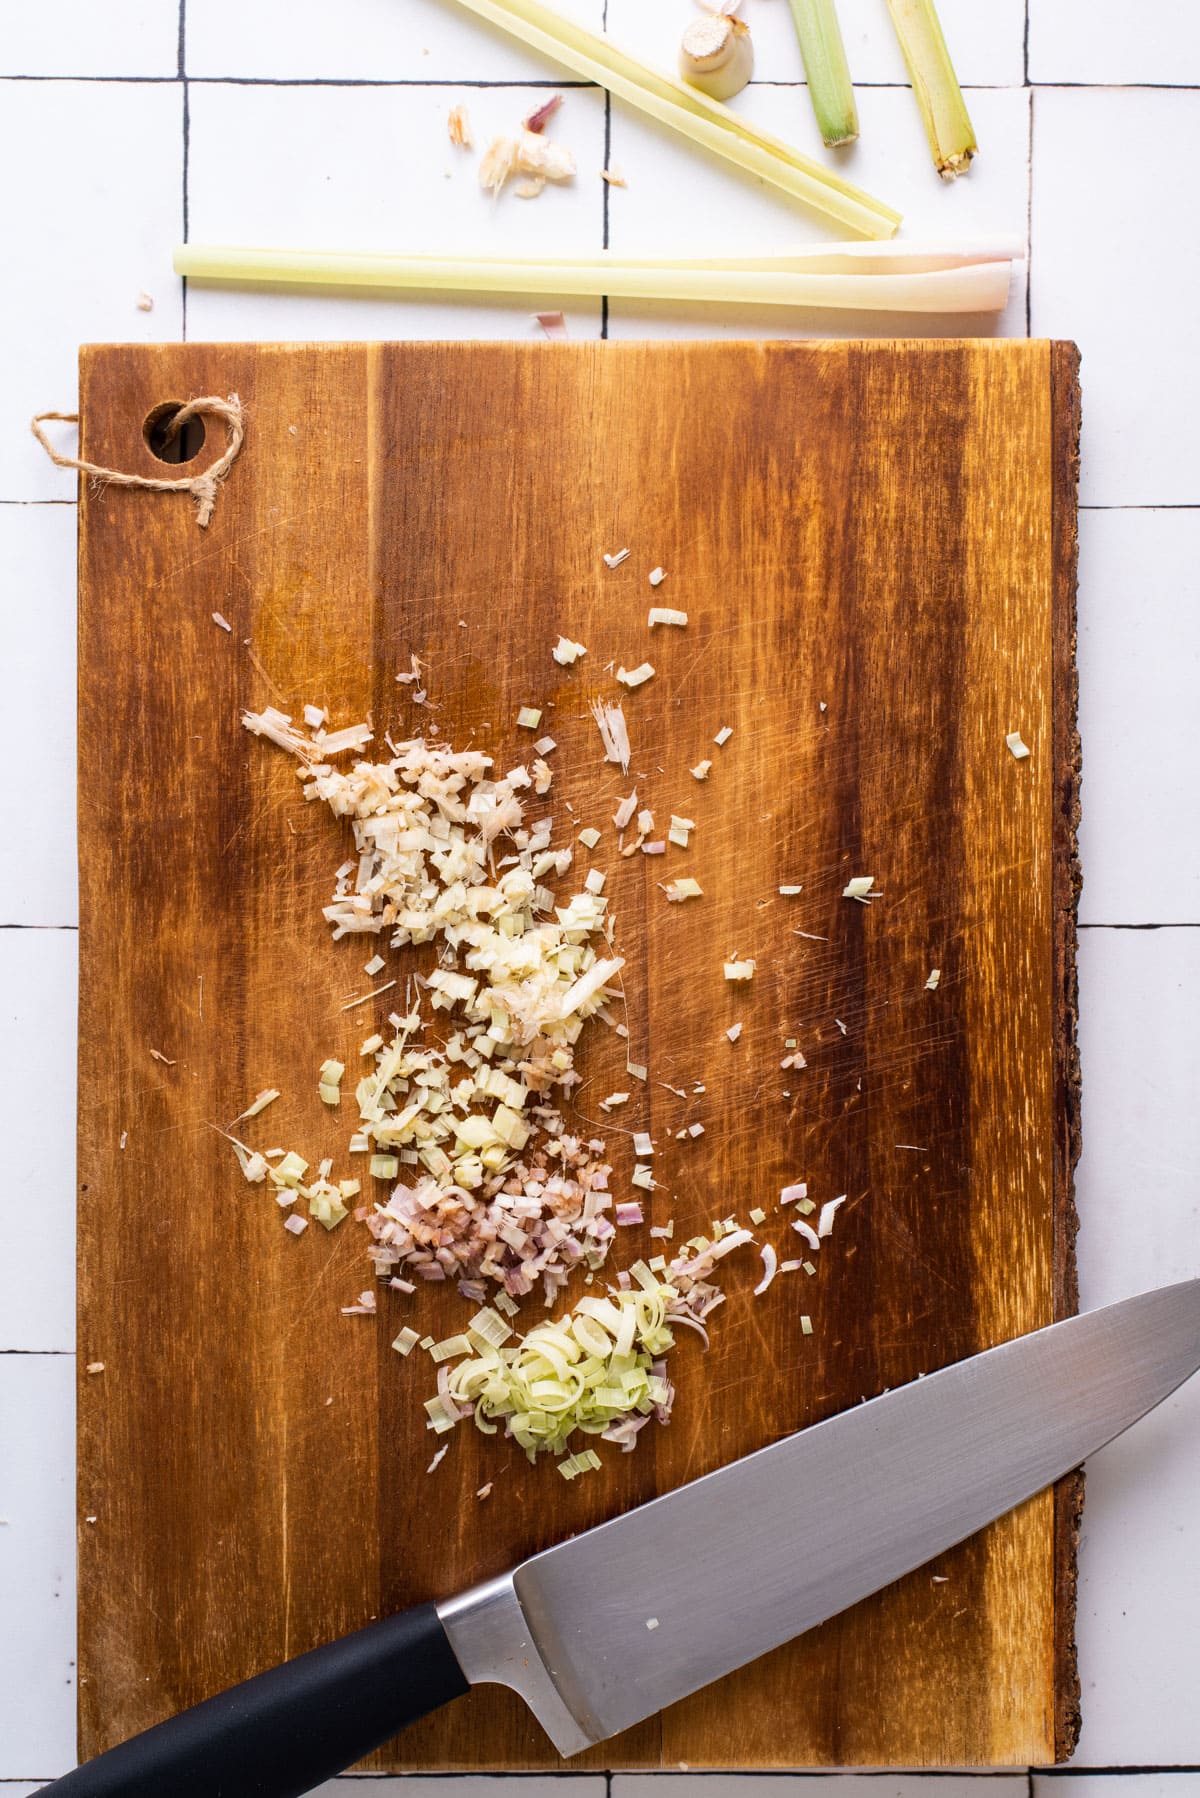 Minced lemongrass on a cutting board.